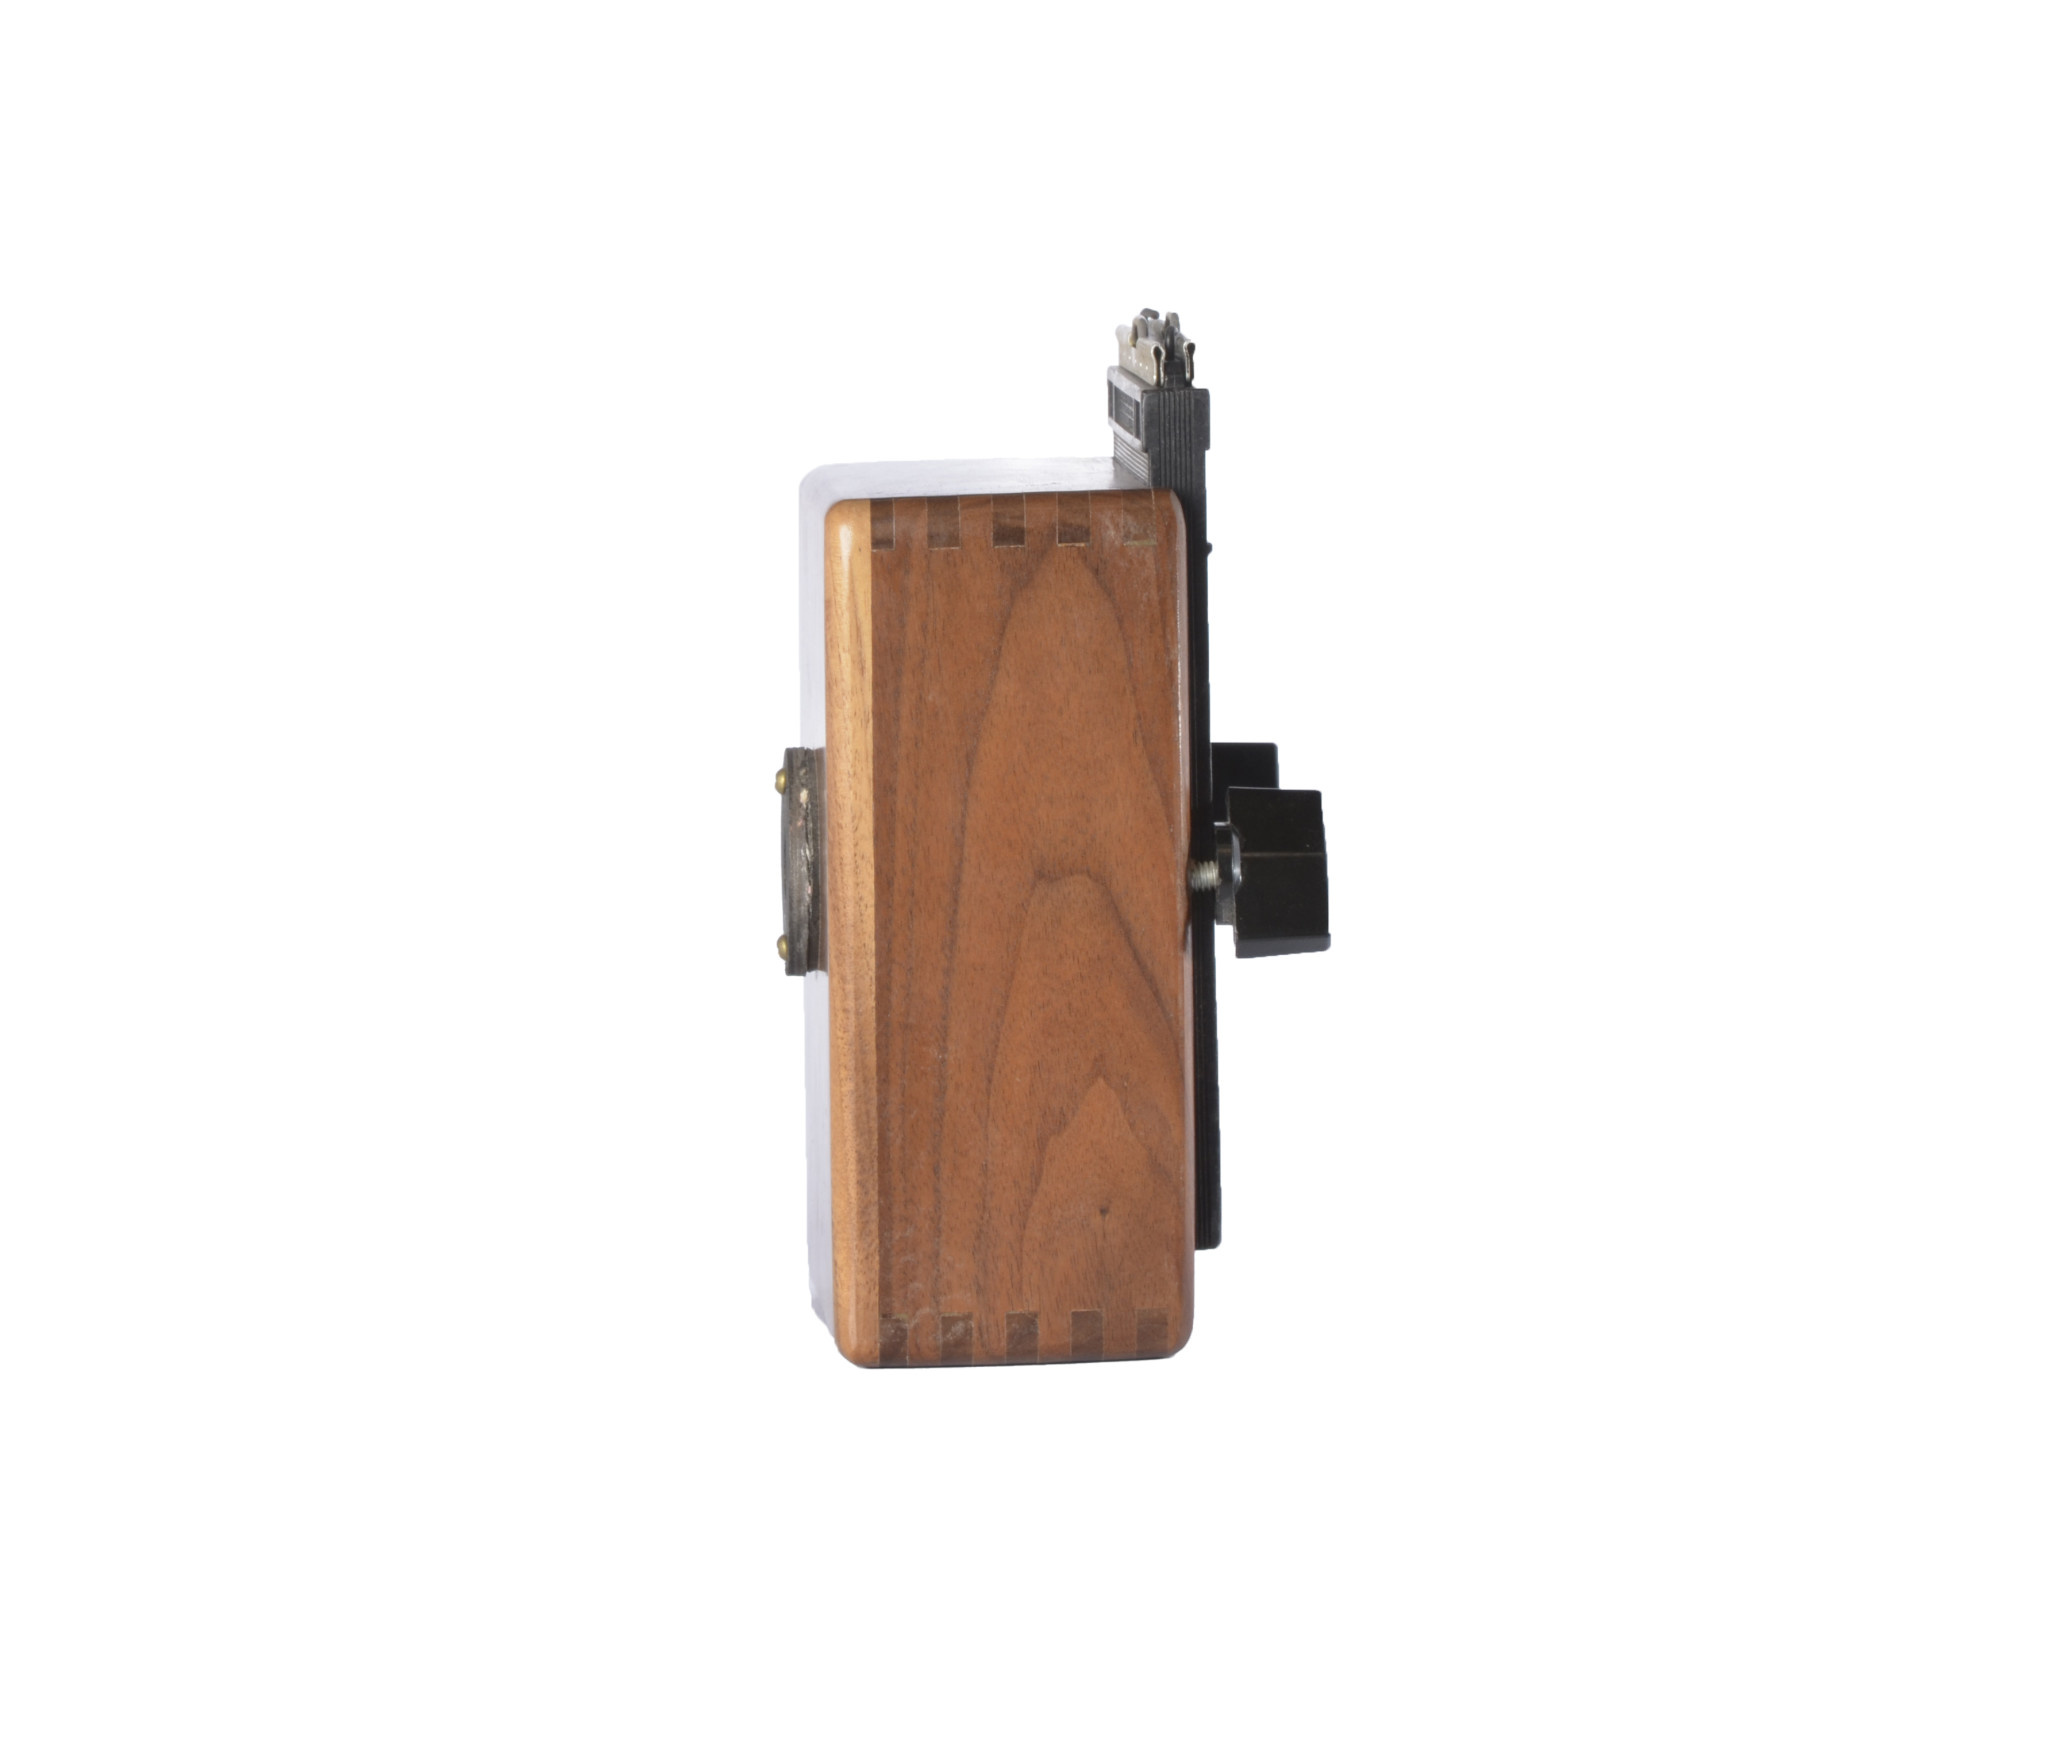 Wooden 4x5 Pinhole Camera